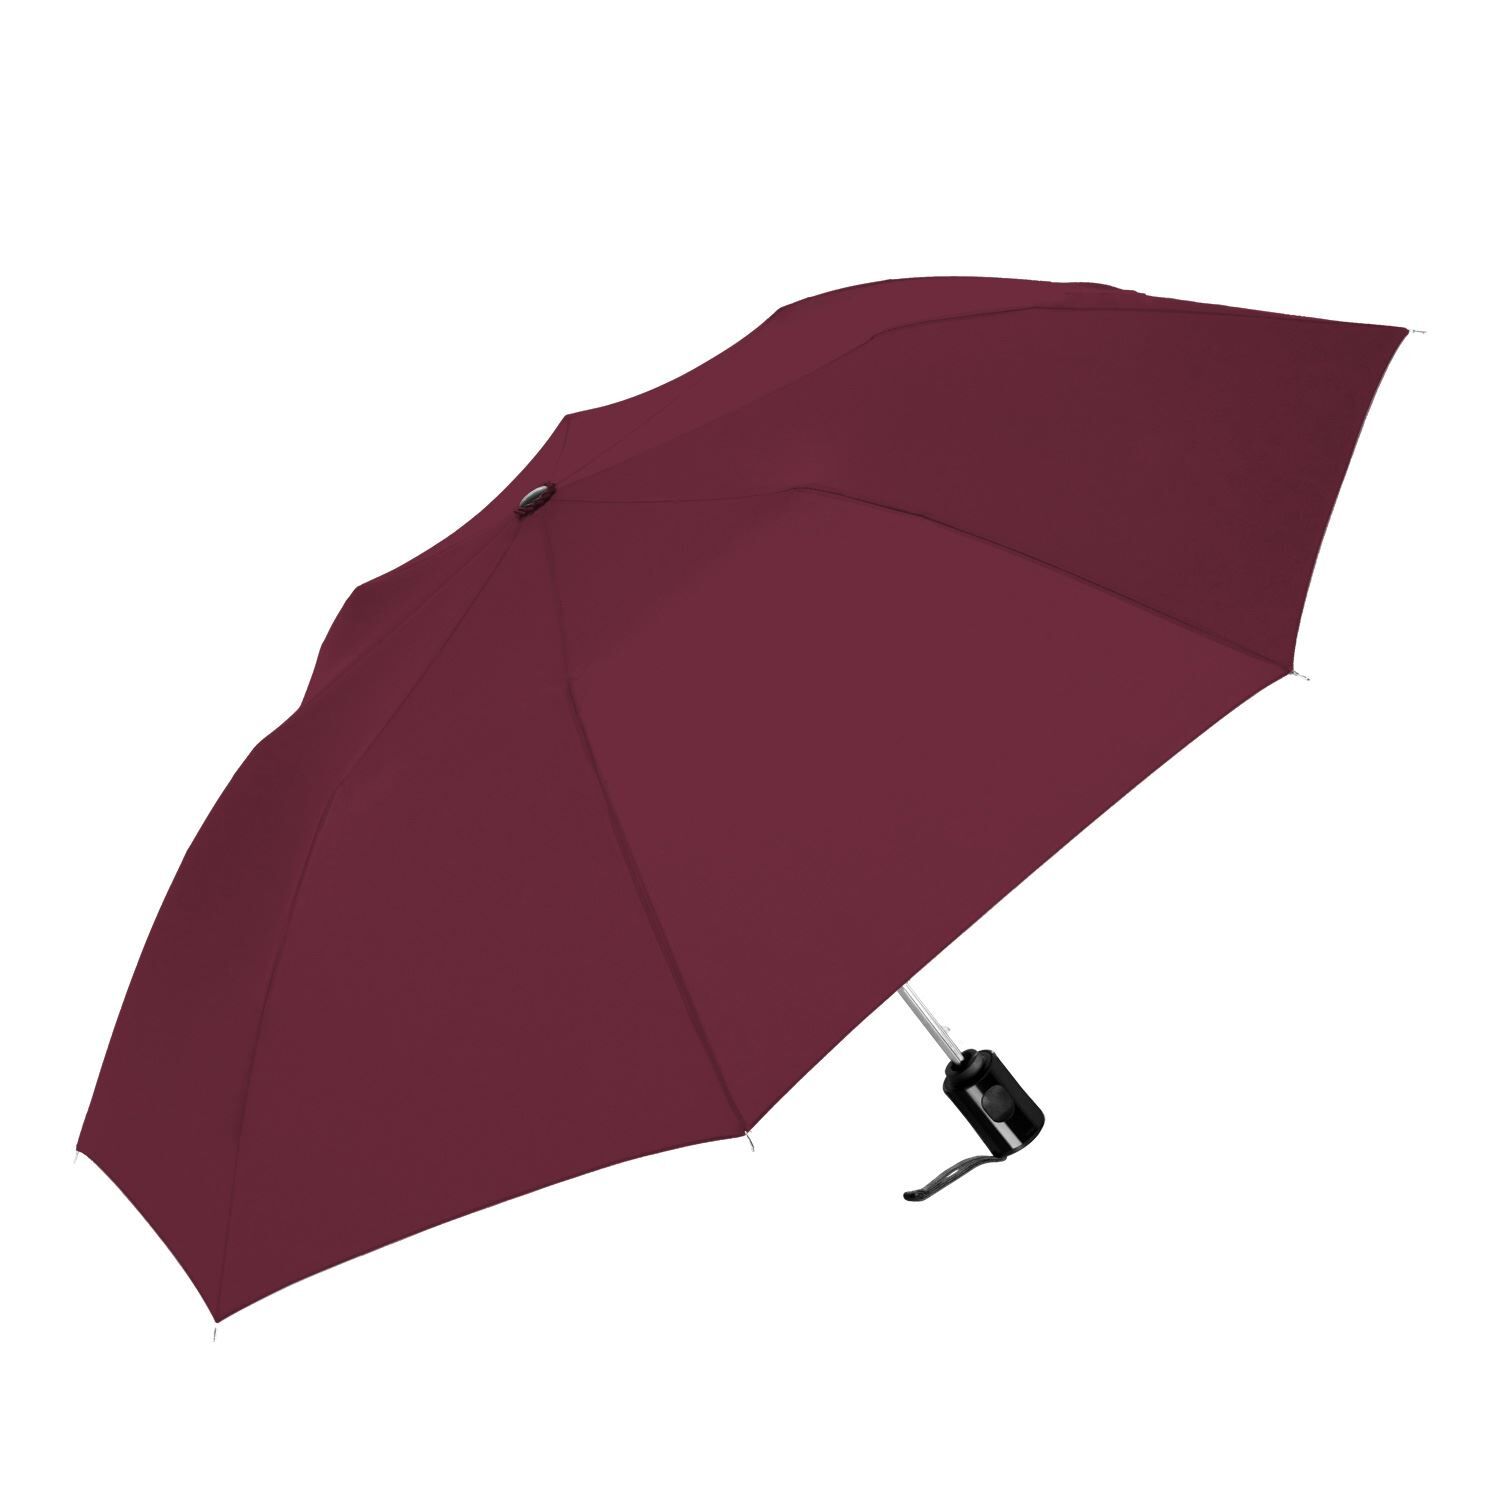 Custom Branded ShedRain Umbrellas - Burgundy